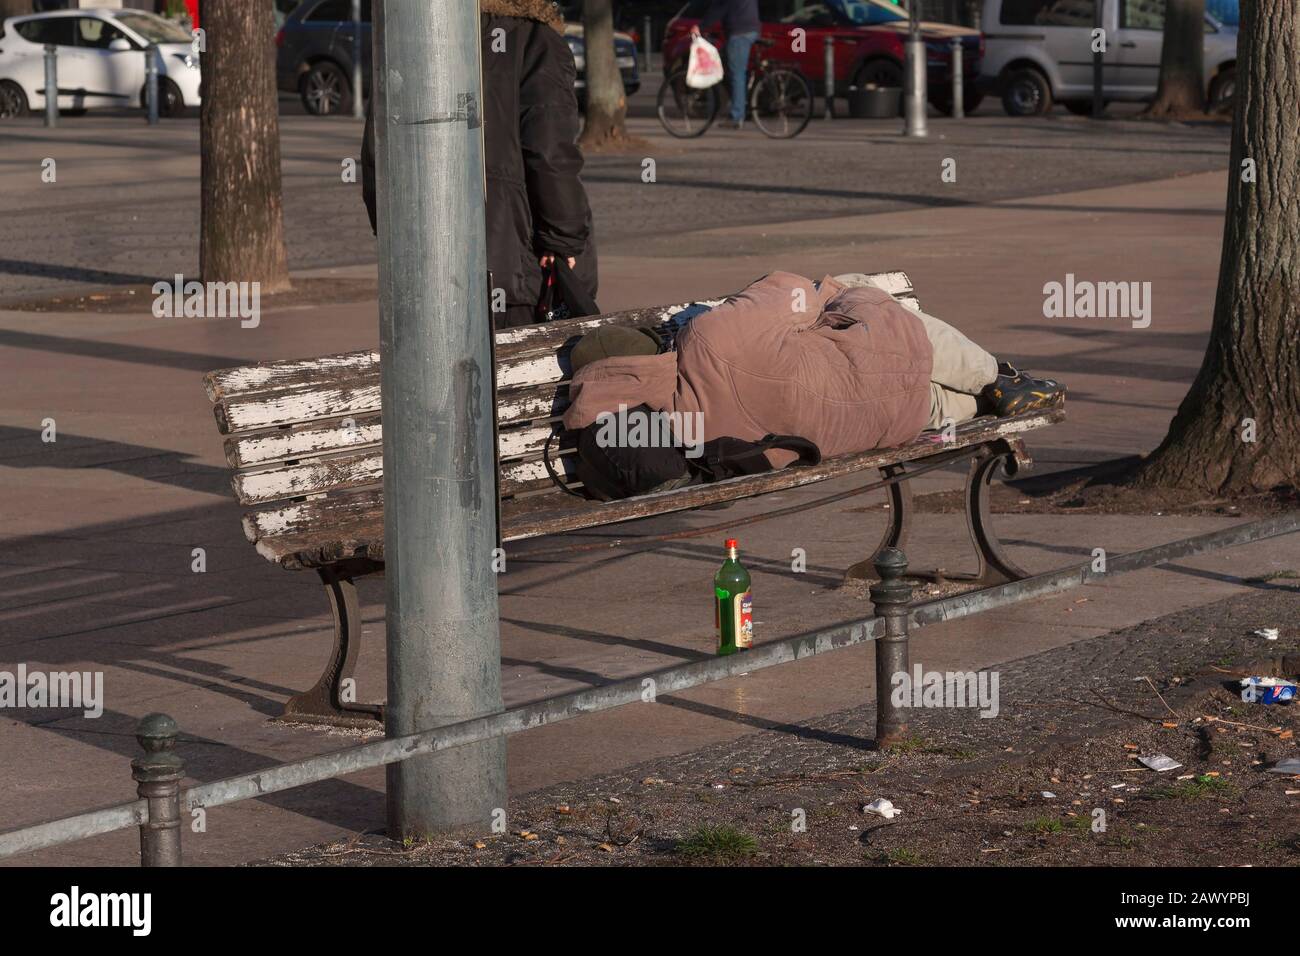 Homeless in Berlin, Germany Stock Photo